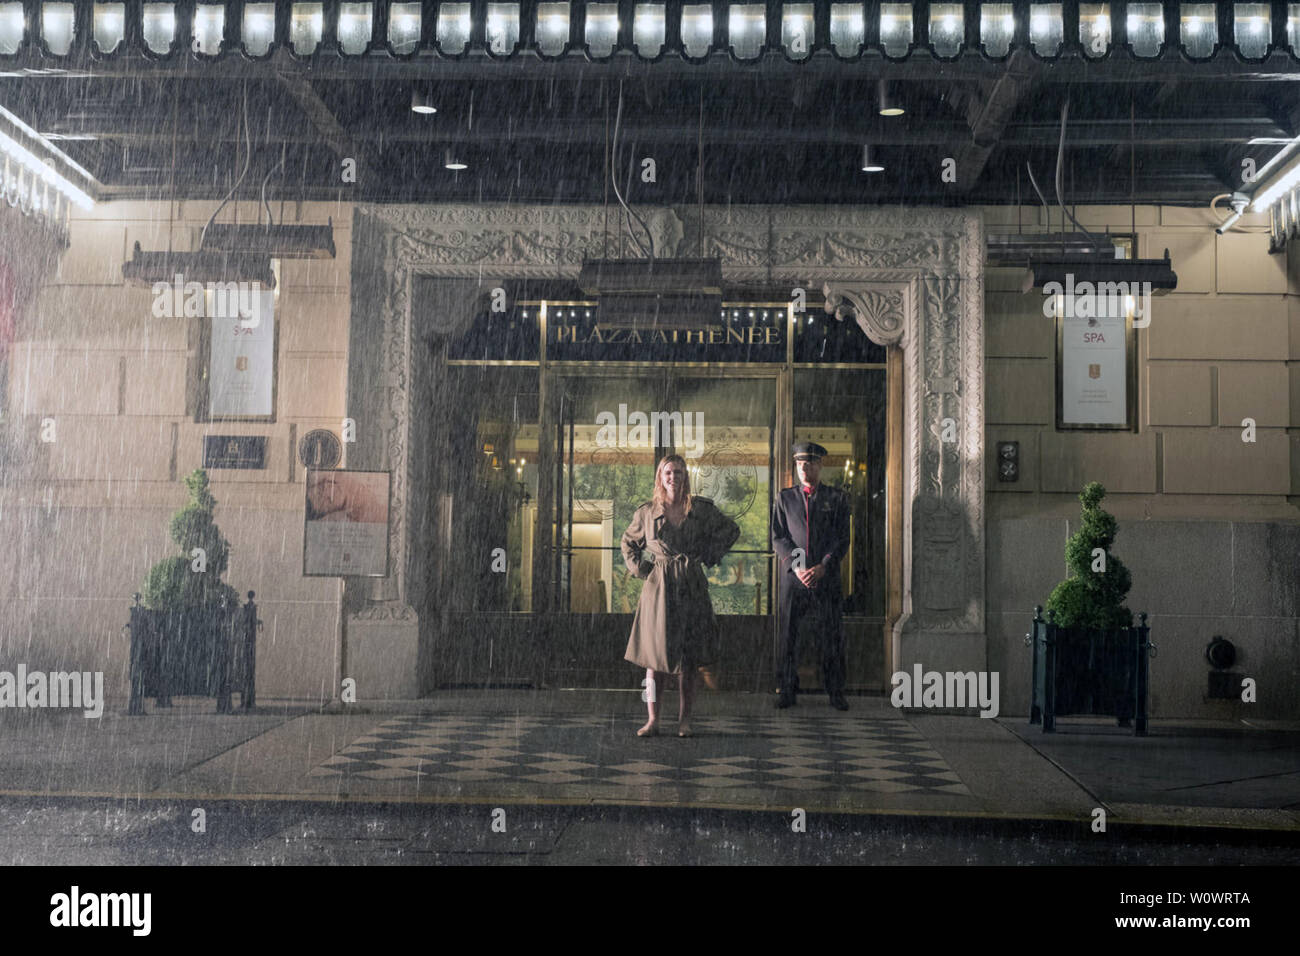 A Rainy Day in New York: Woody Allen's Italian Distributor